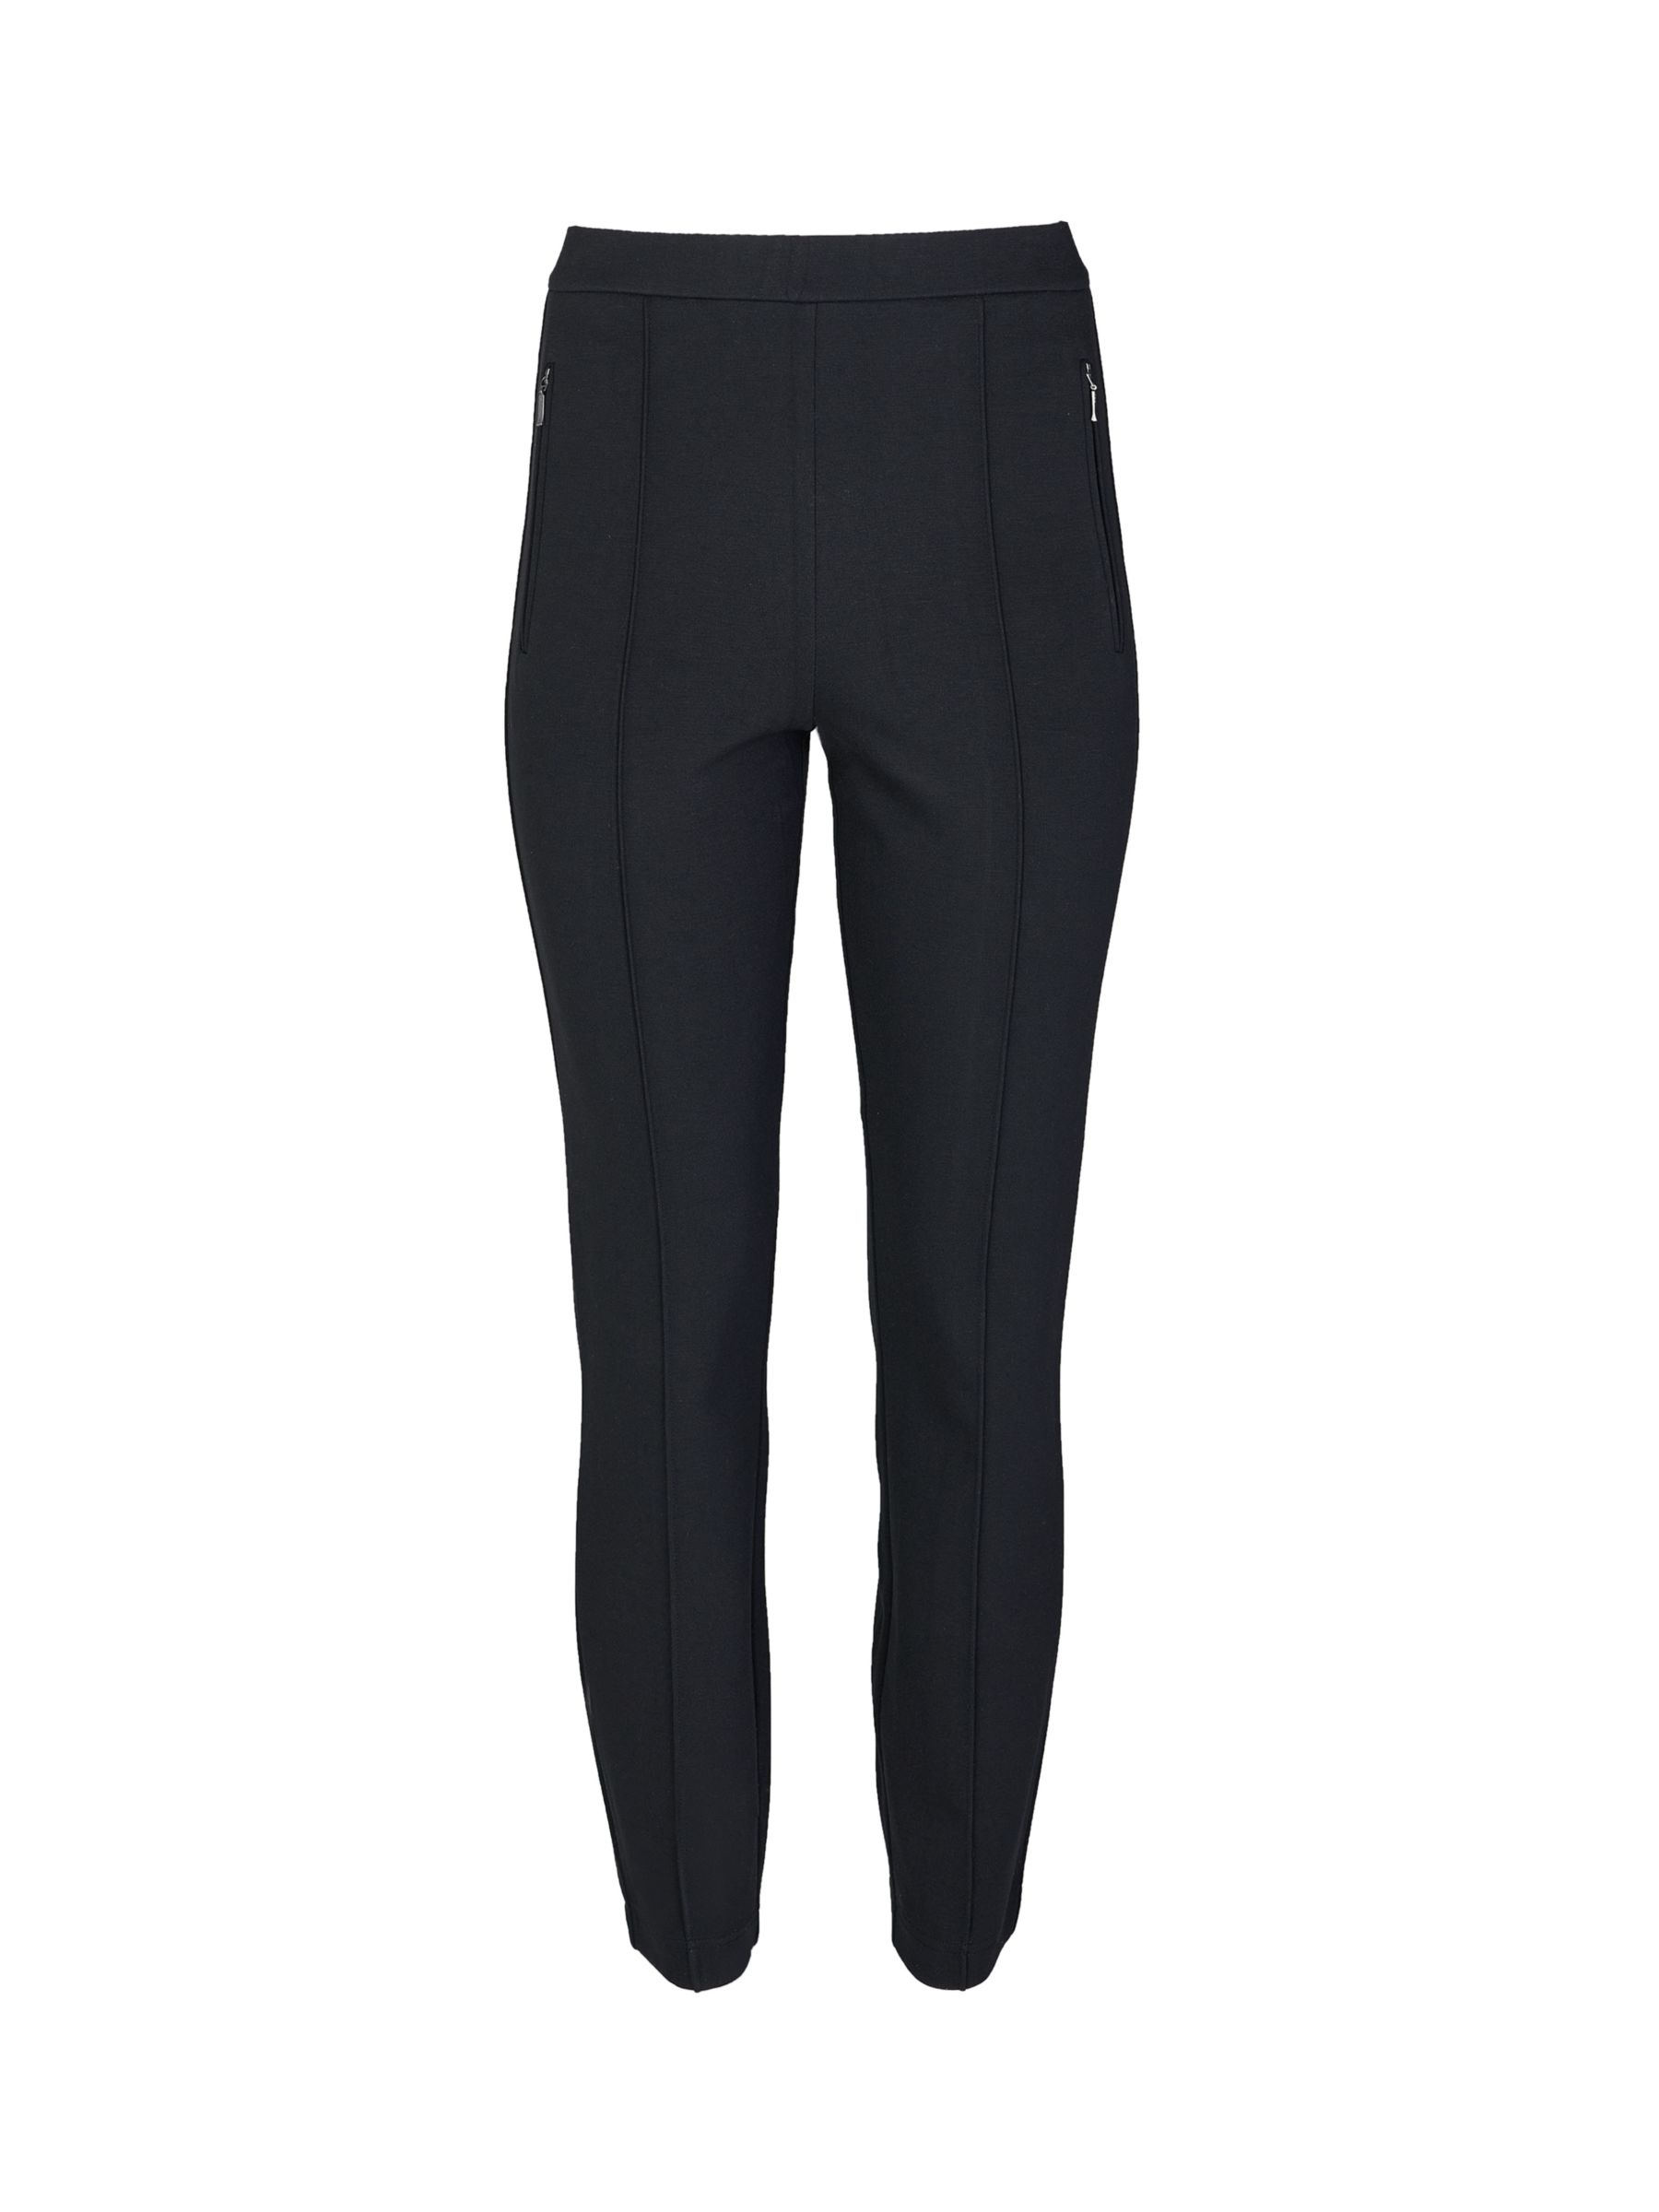 Sweaty Betty Black Active Pants Size XL - 67% off